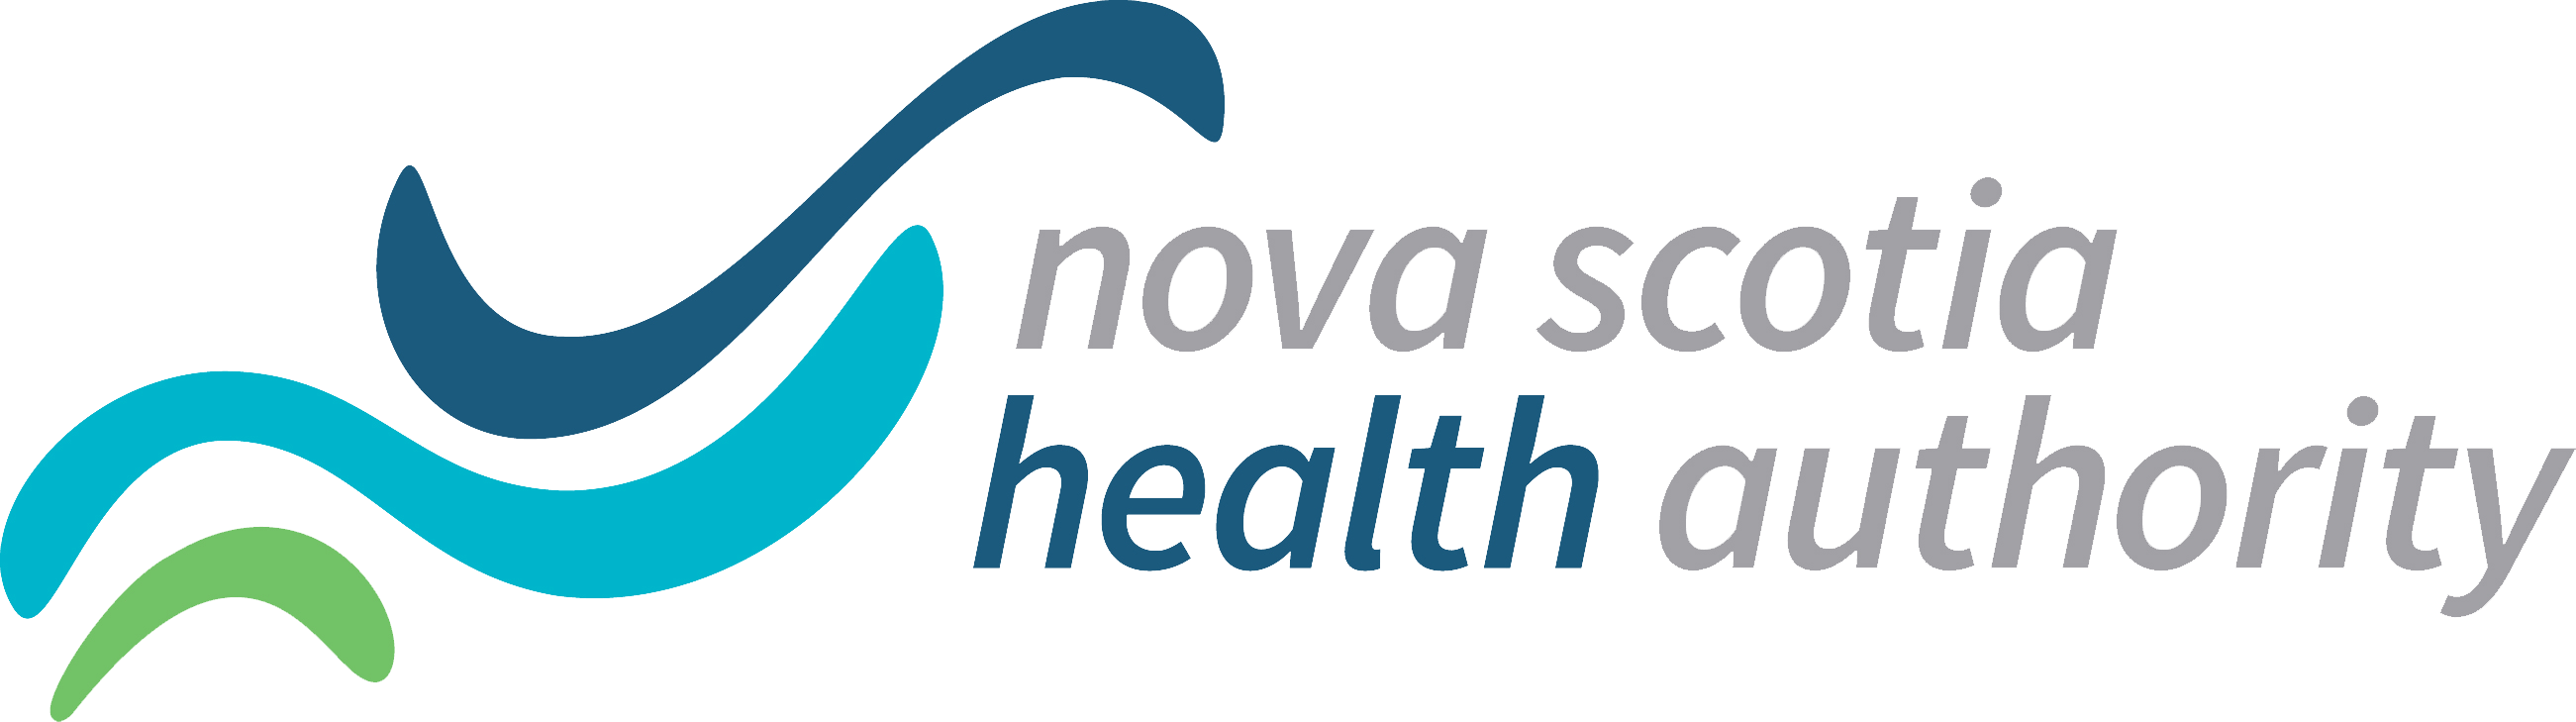 nova scotia health authority